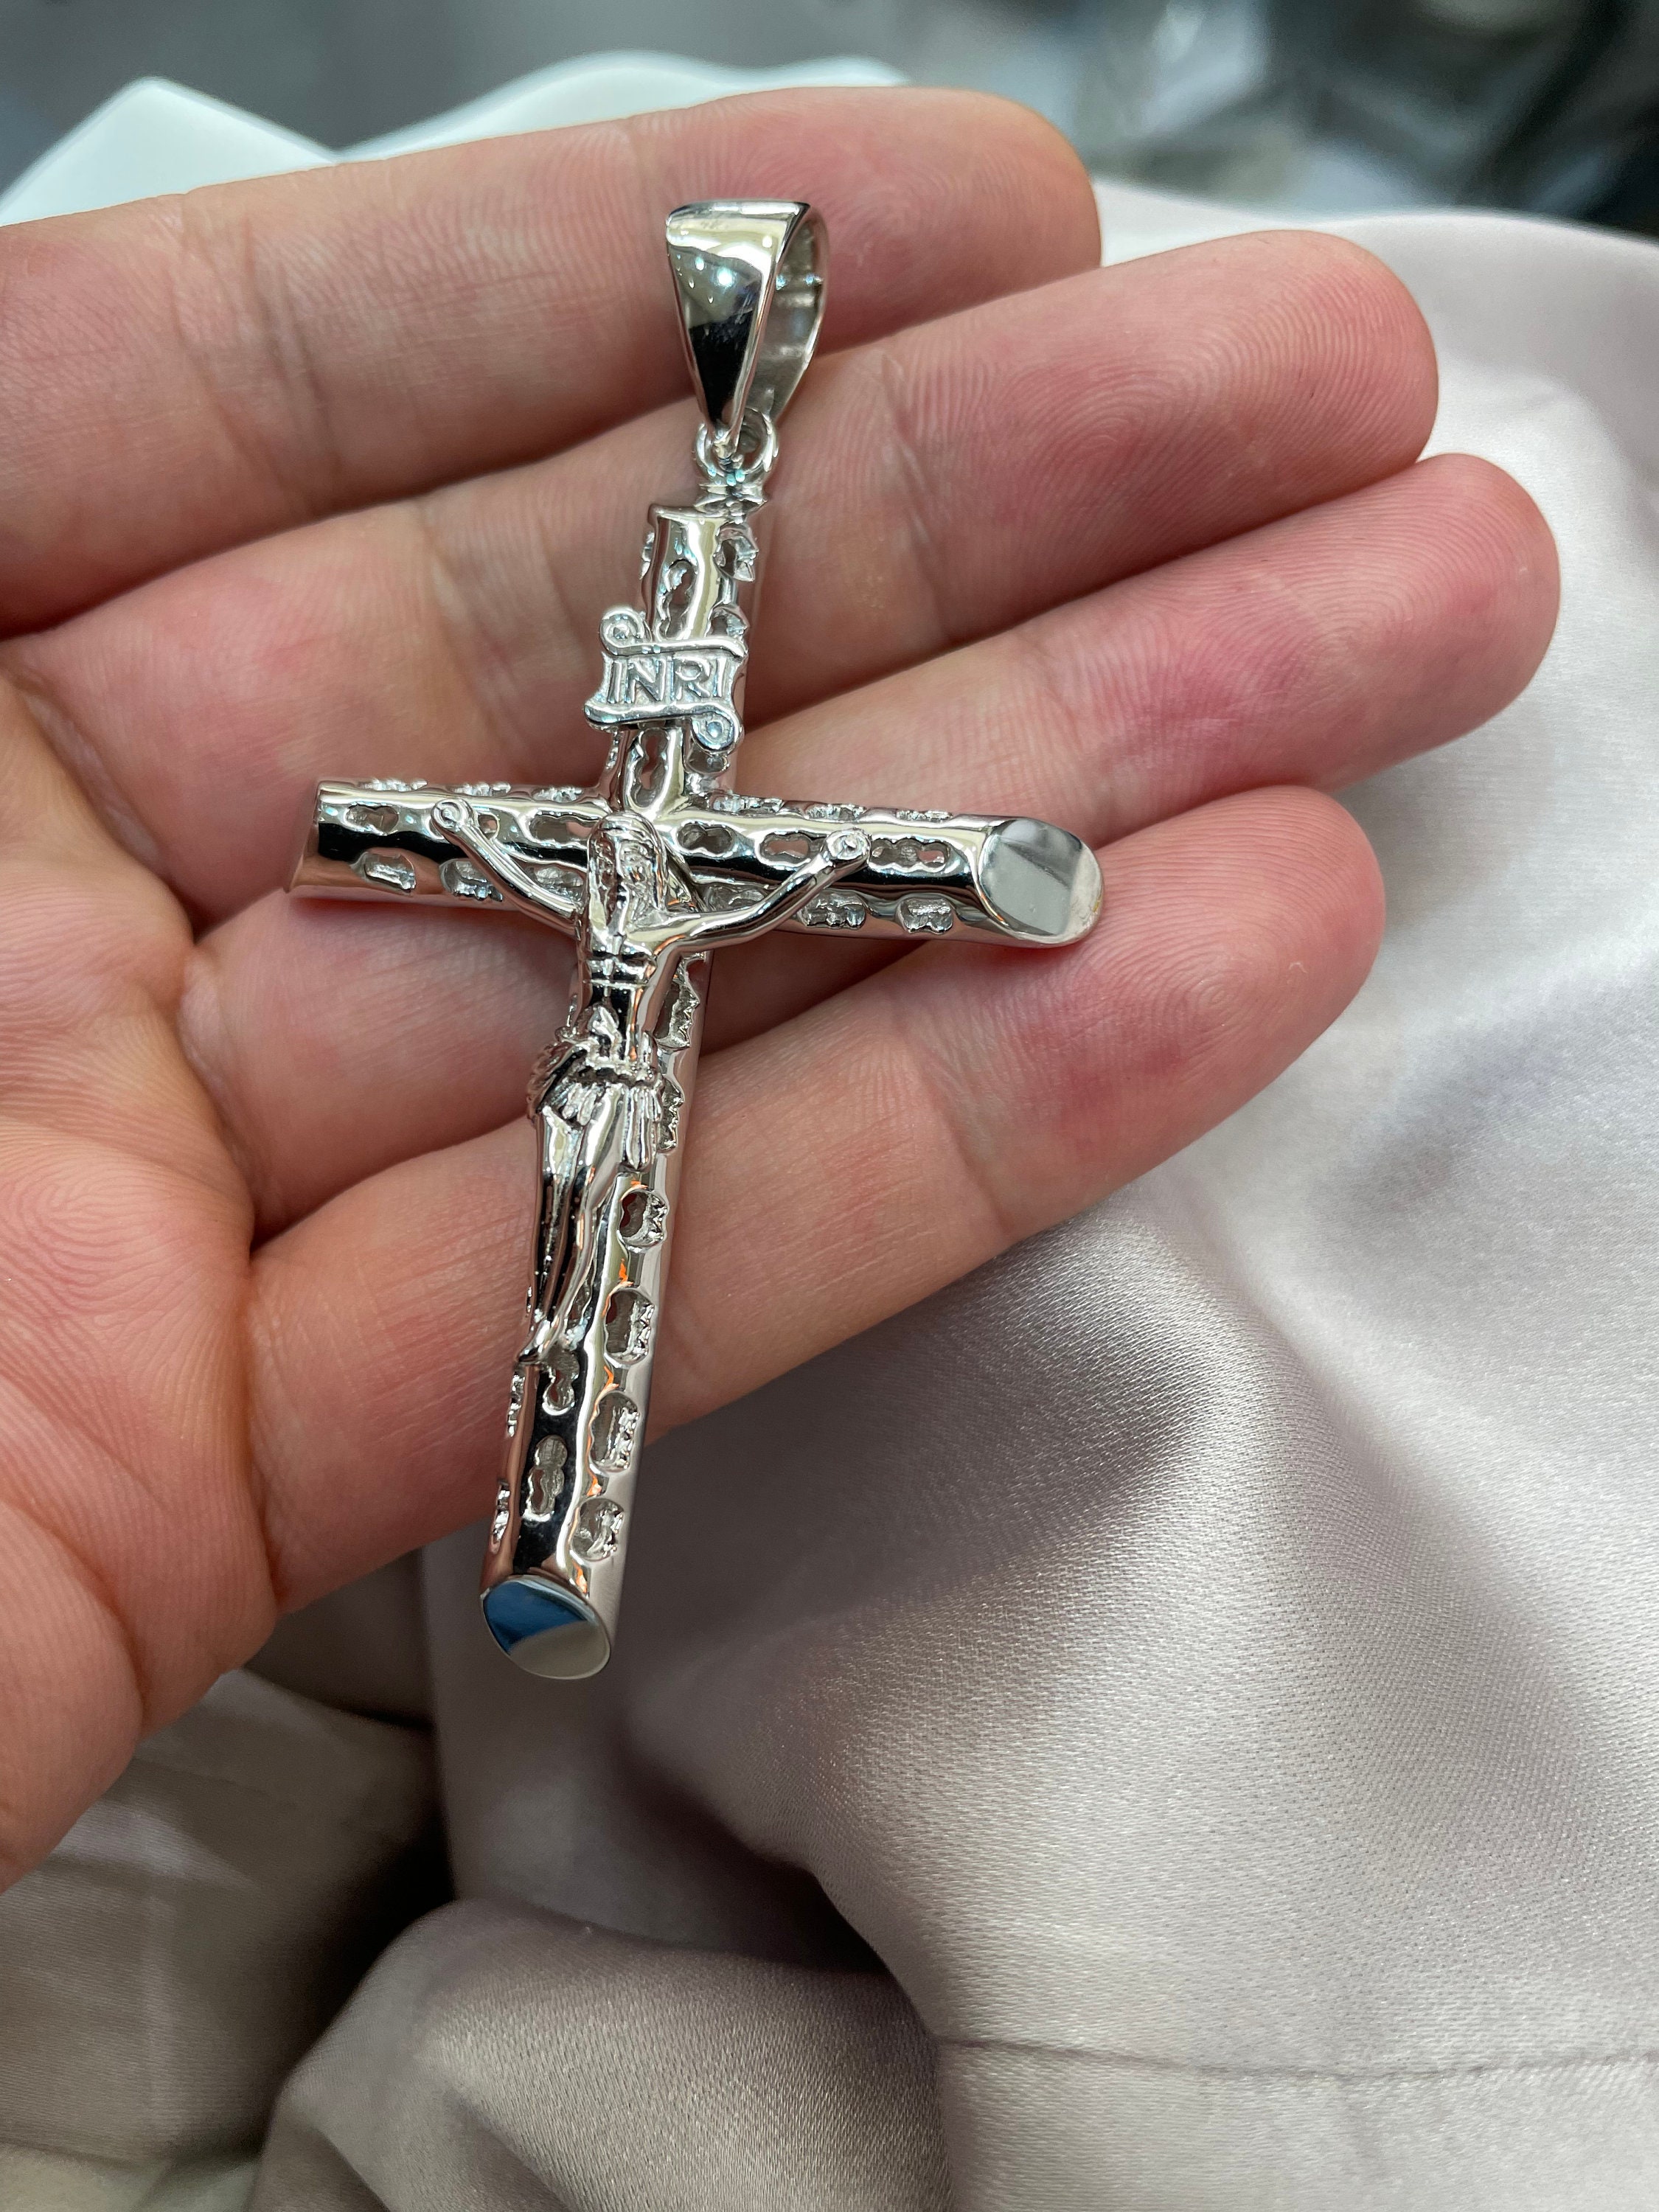 BULK 16 Silver Crucifix Cross Charm Pendant by TIJC SP0935B 